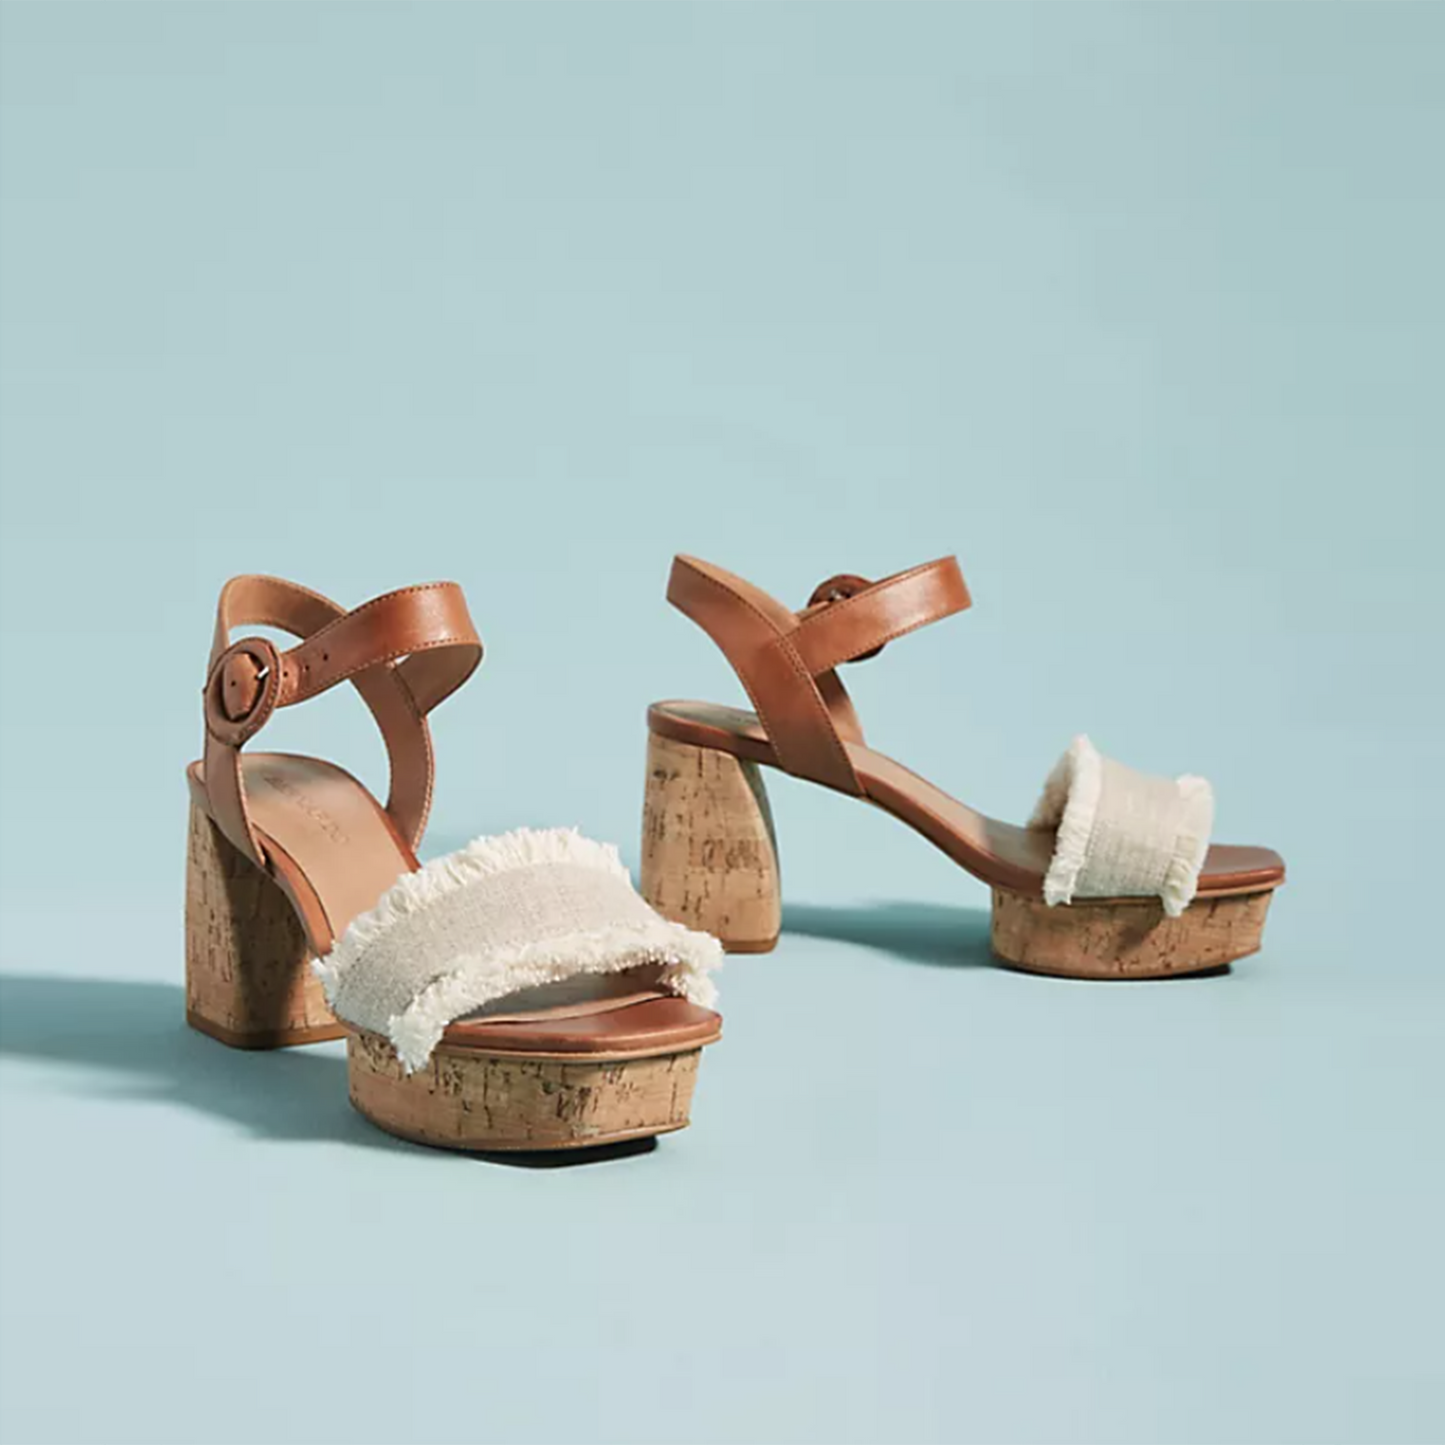 bernardo regan platform sandal heels - size 11